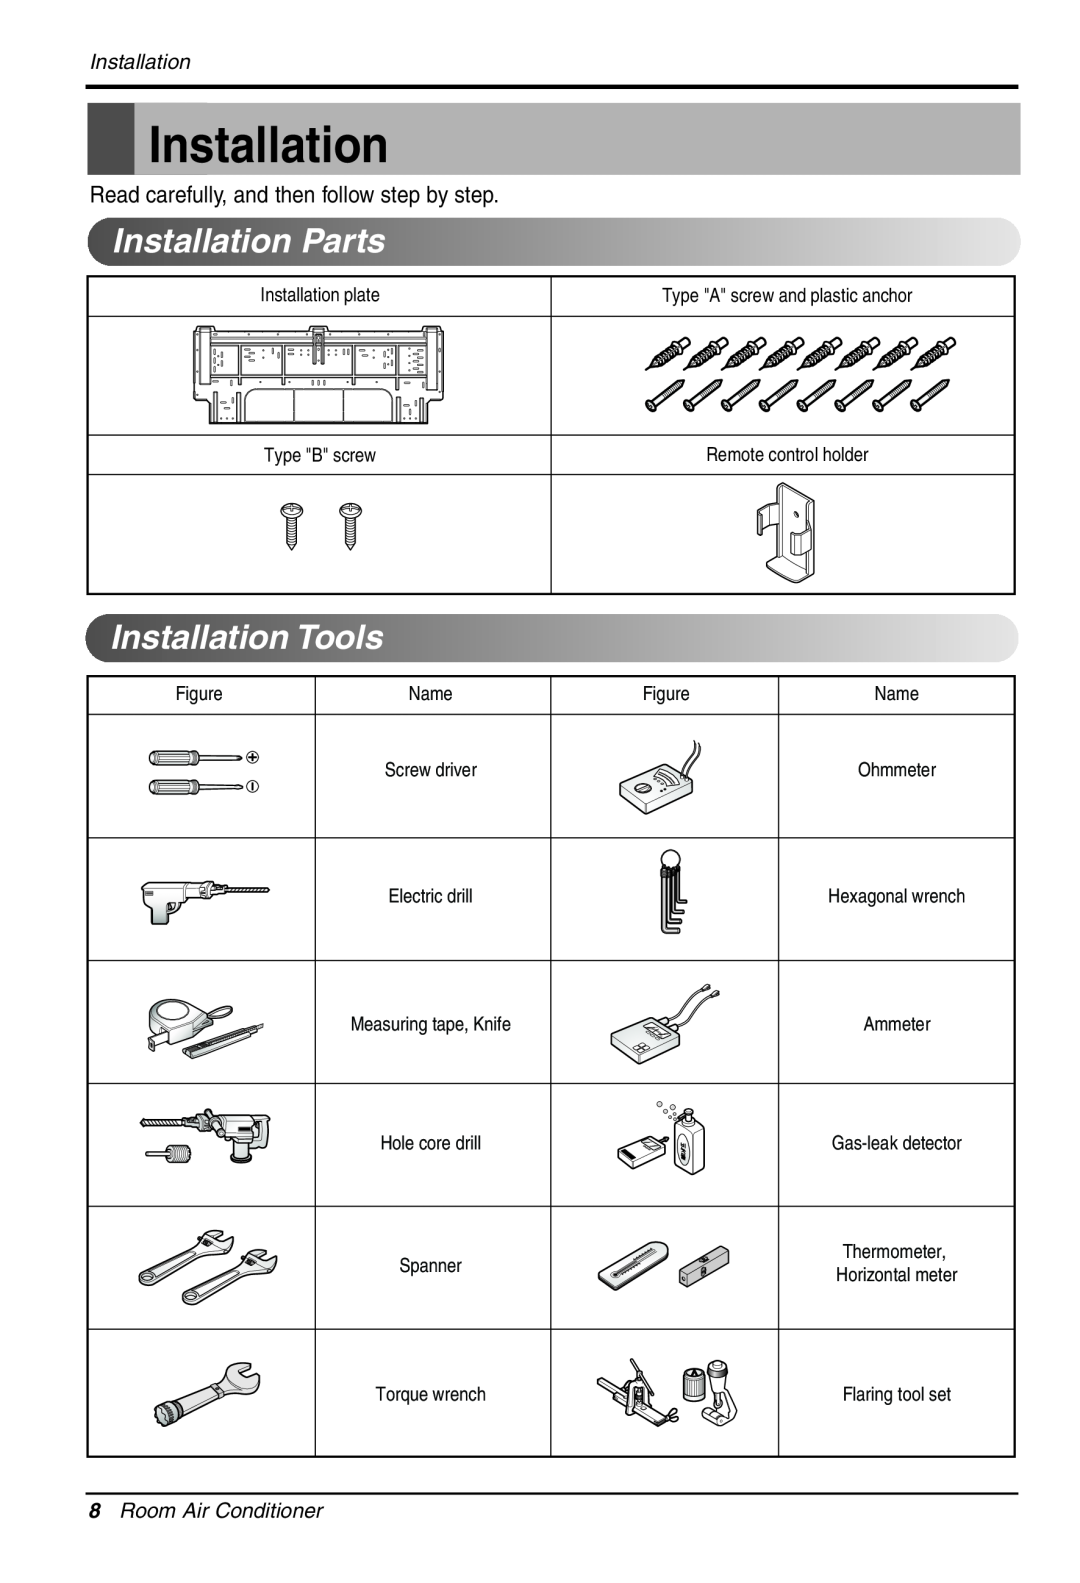 LG Electronics LS305HV installation manual InstallationParts, InstallationTools, Room Air Conditioner 